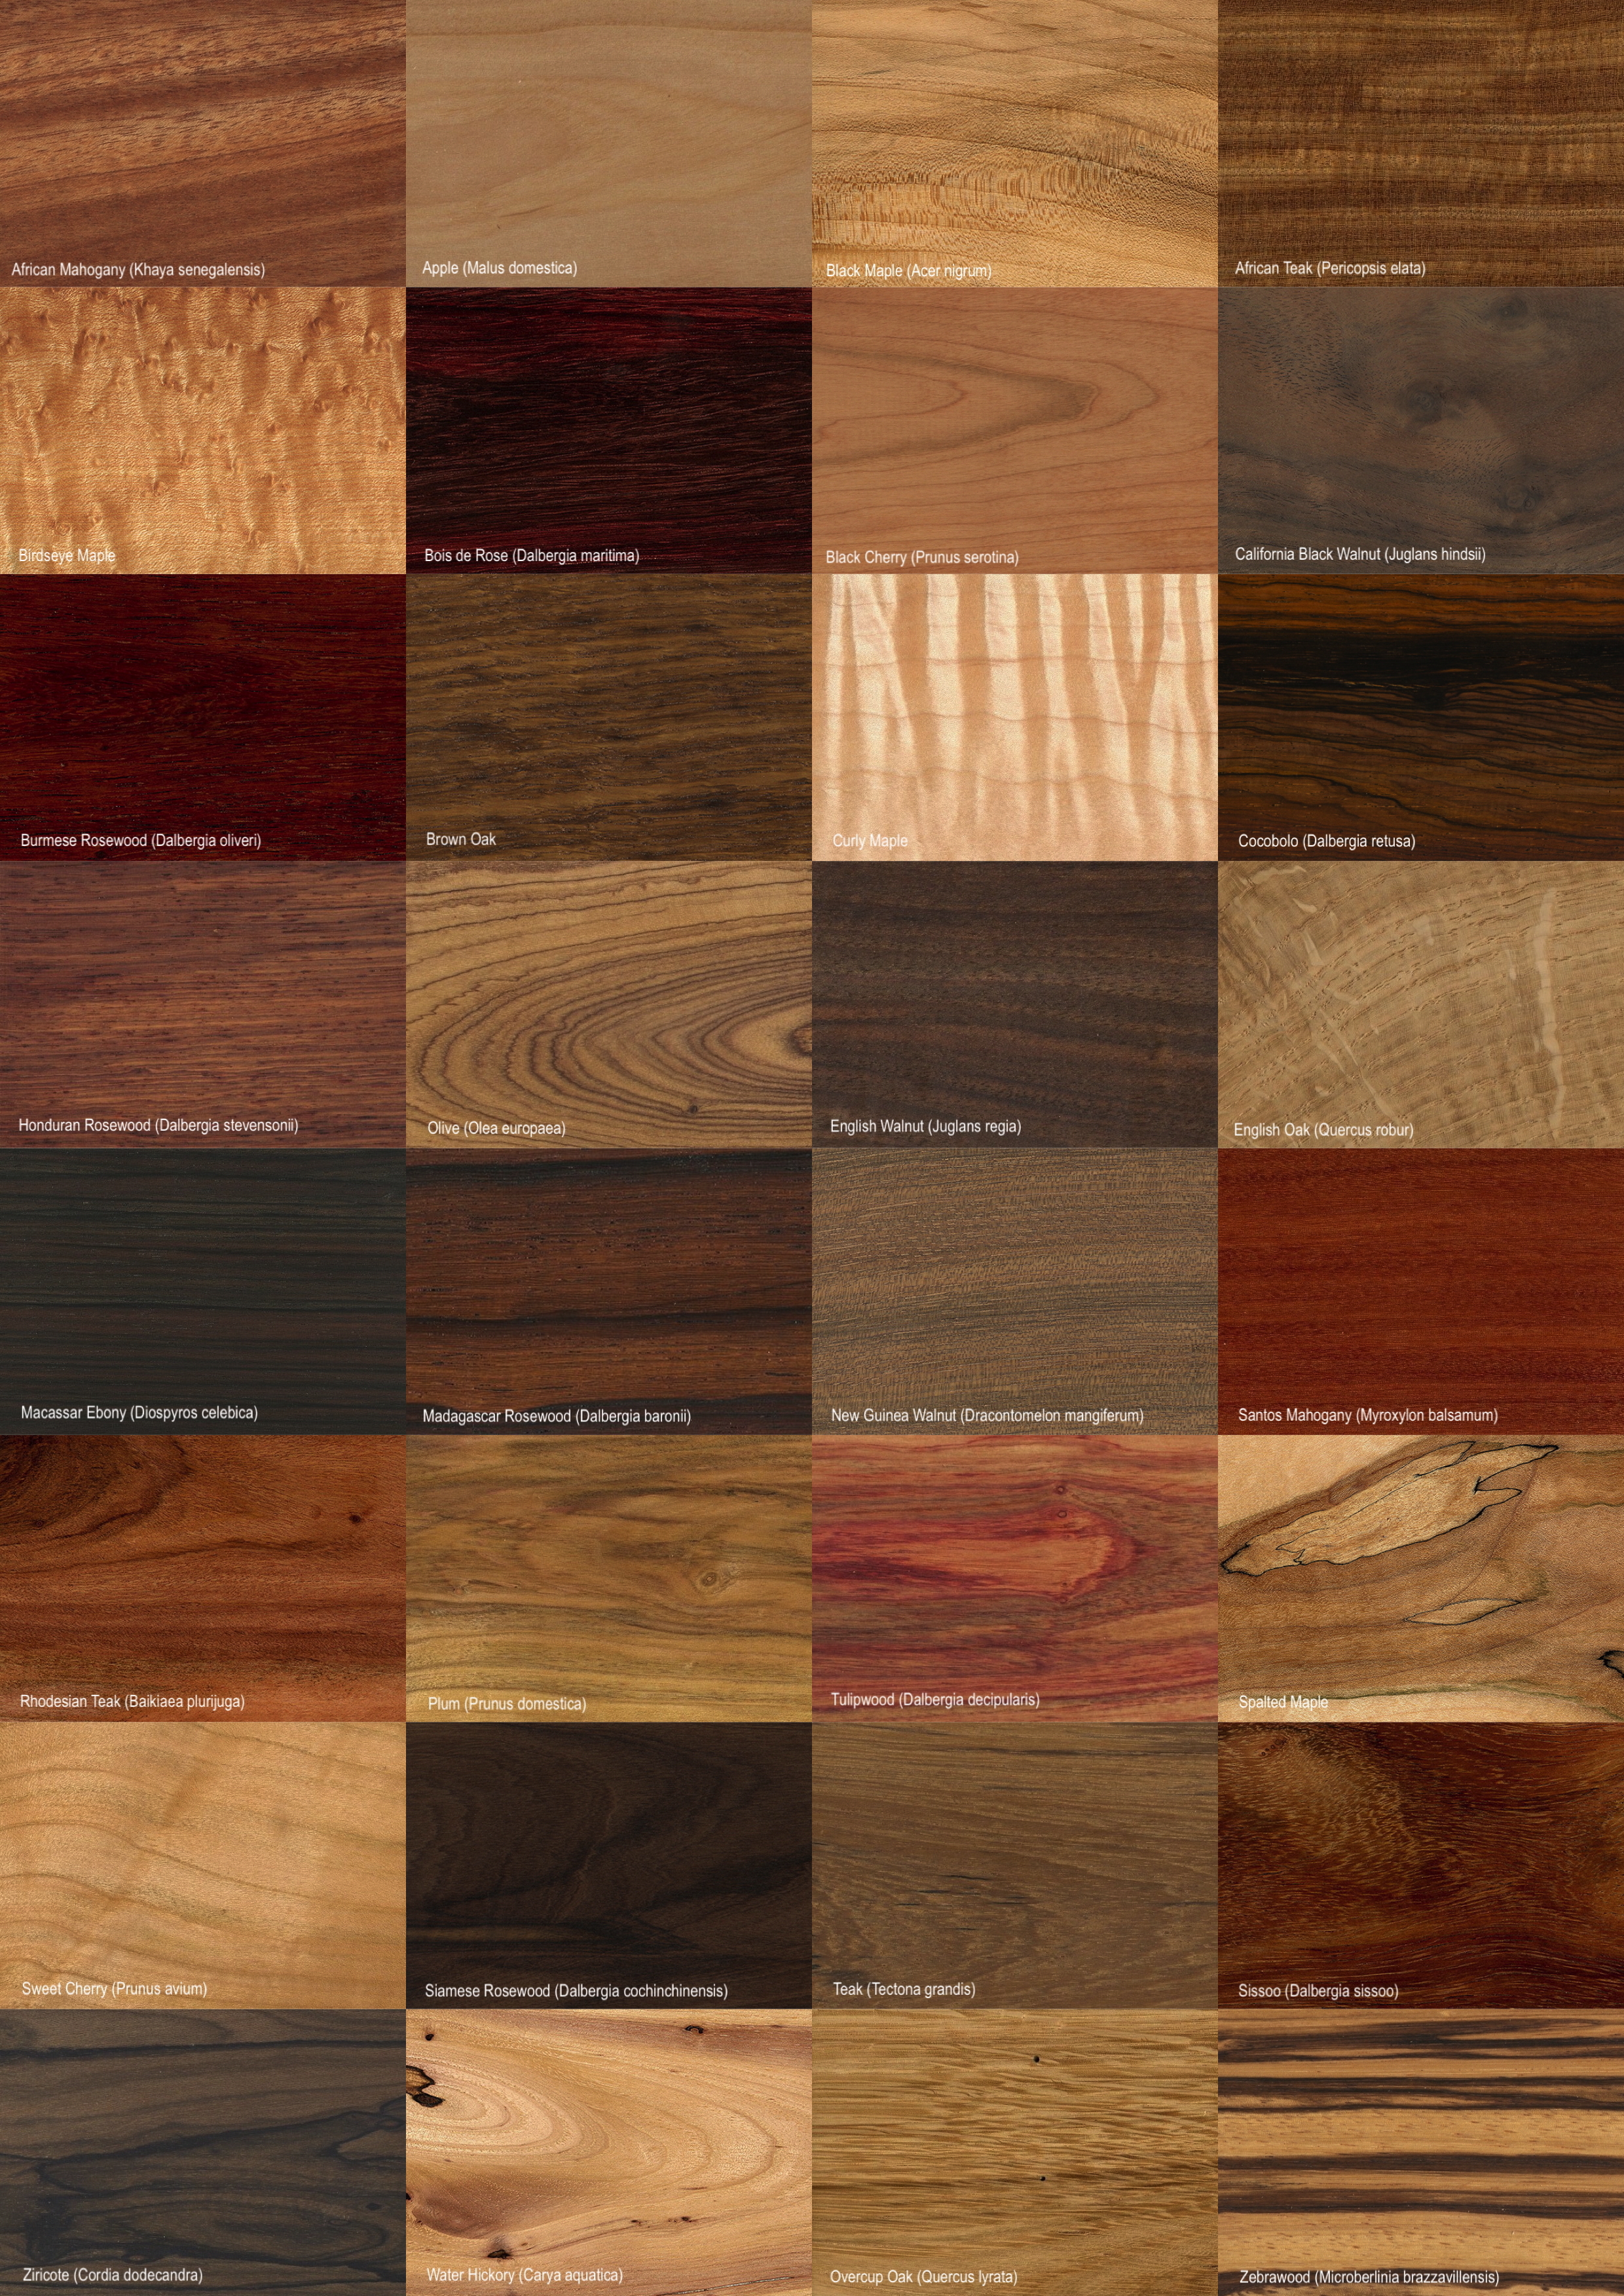 wood types.jpg